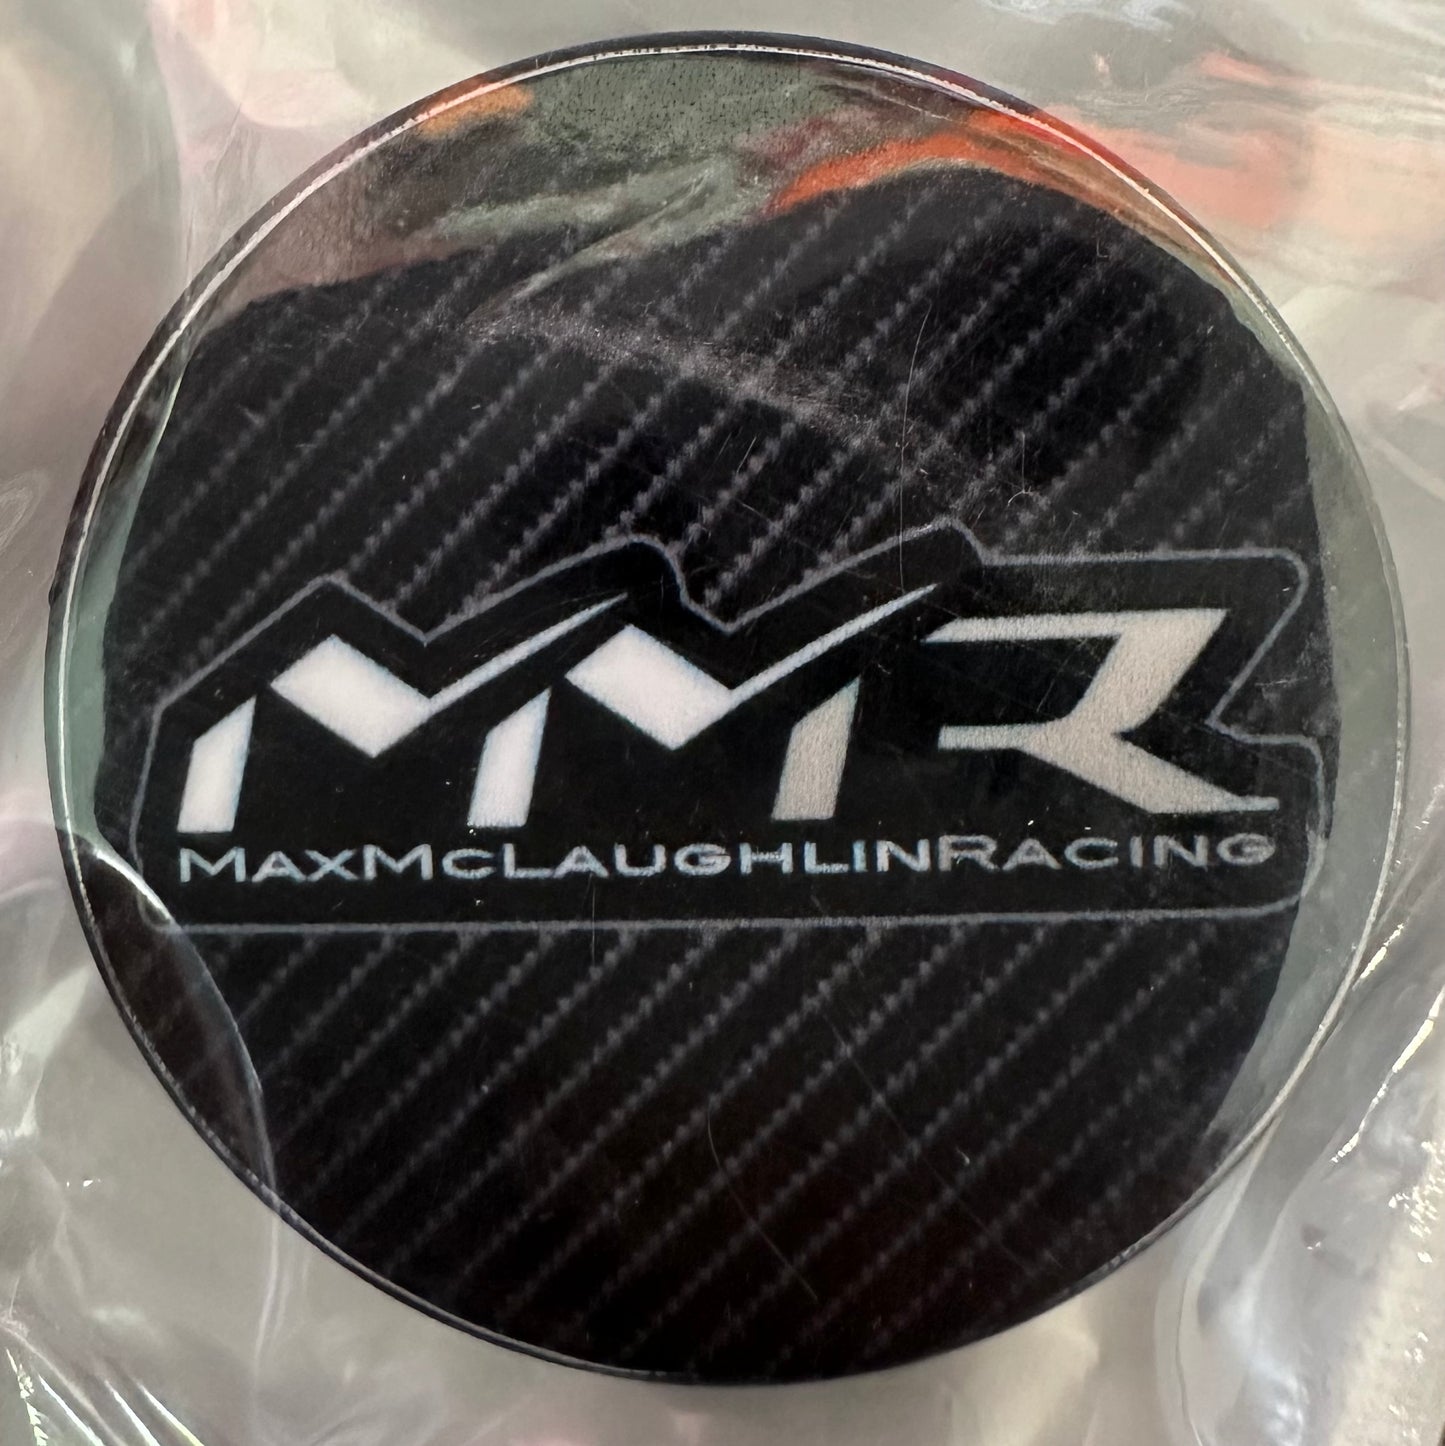 Mad Max McLaughlin Racing pop socket